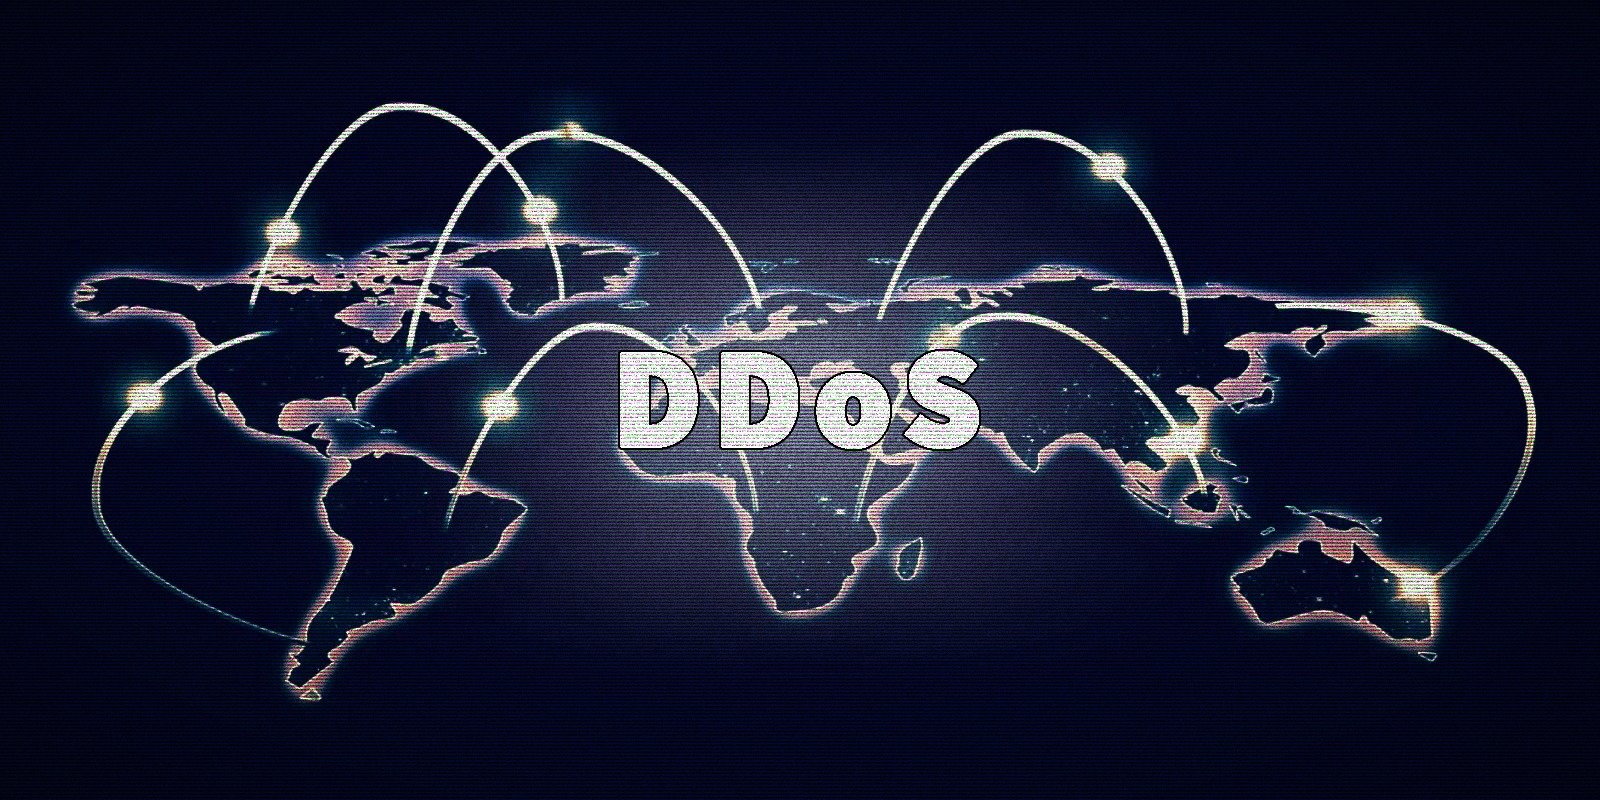 Updated RapperBot malware targets game servers in DDoS attacks